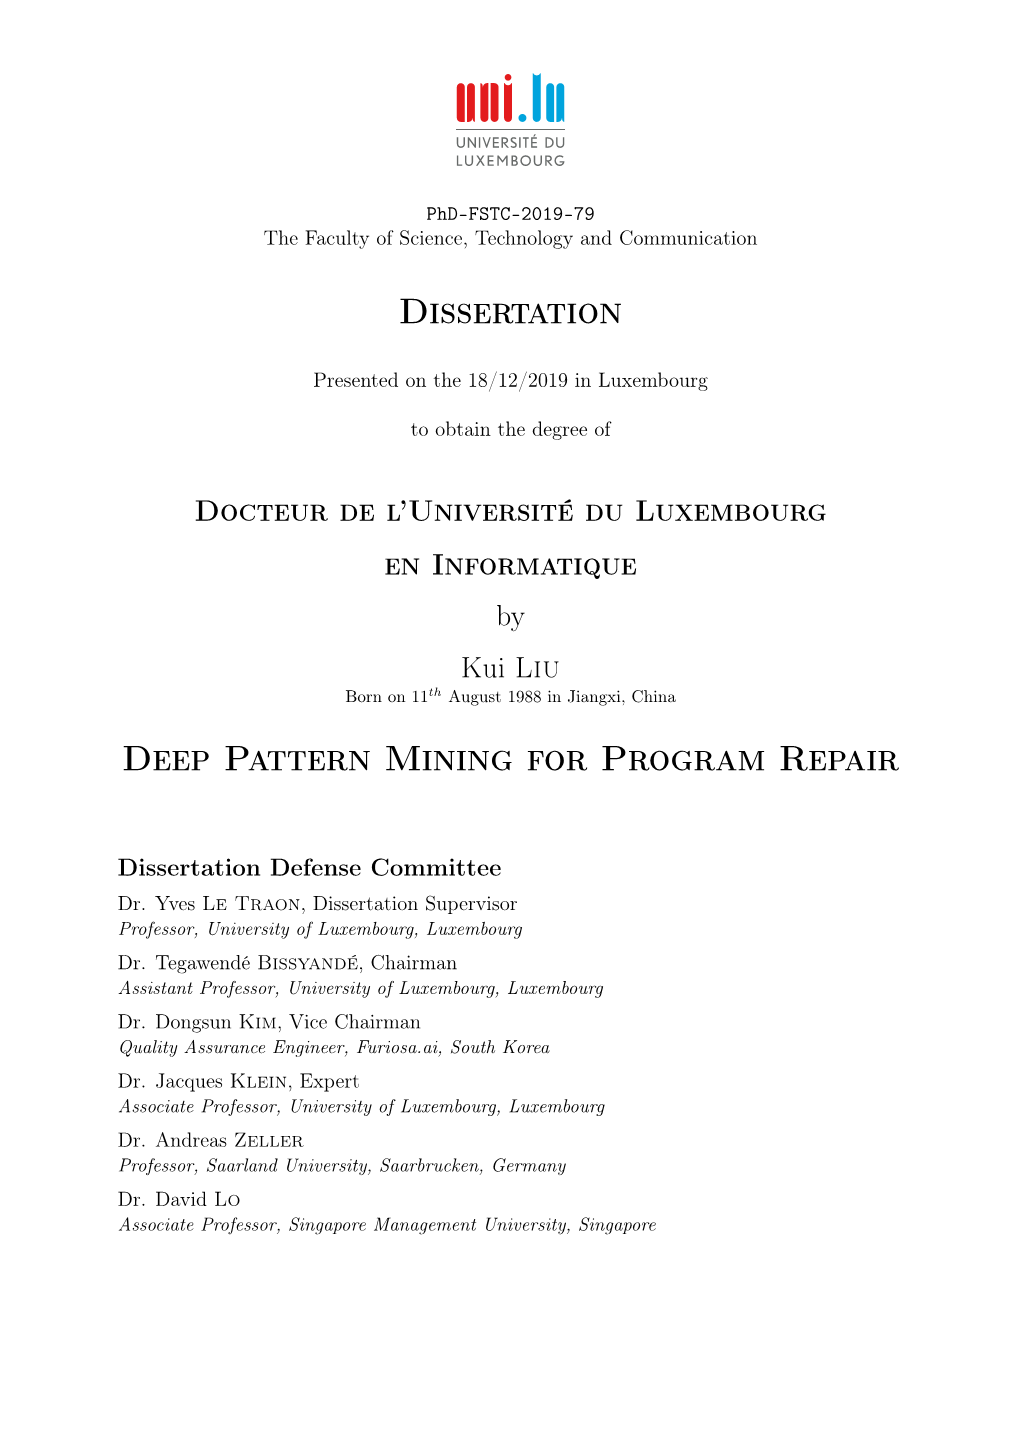 Dissertation Deep Pattern Mining for Program Repair